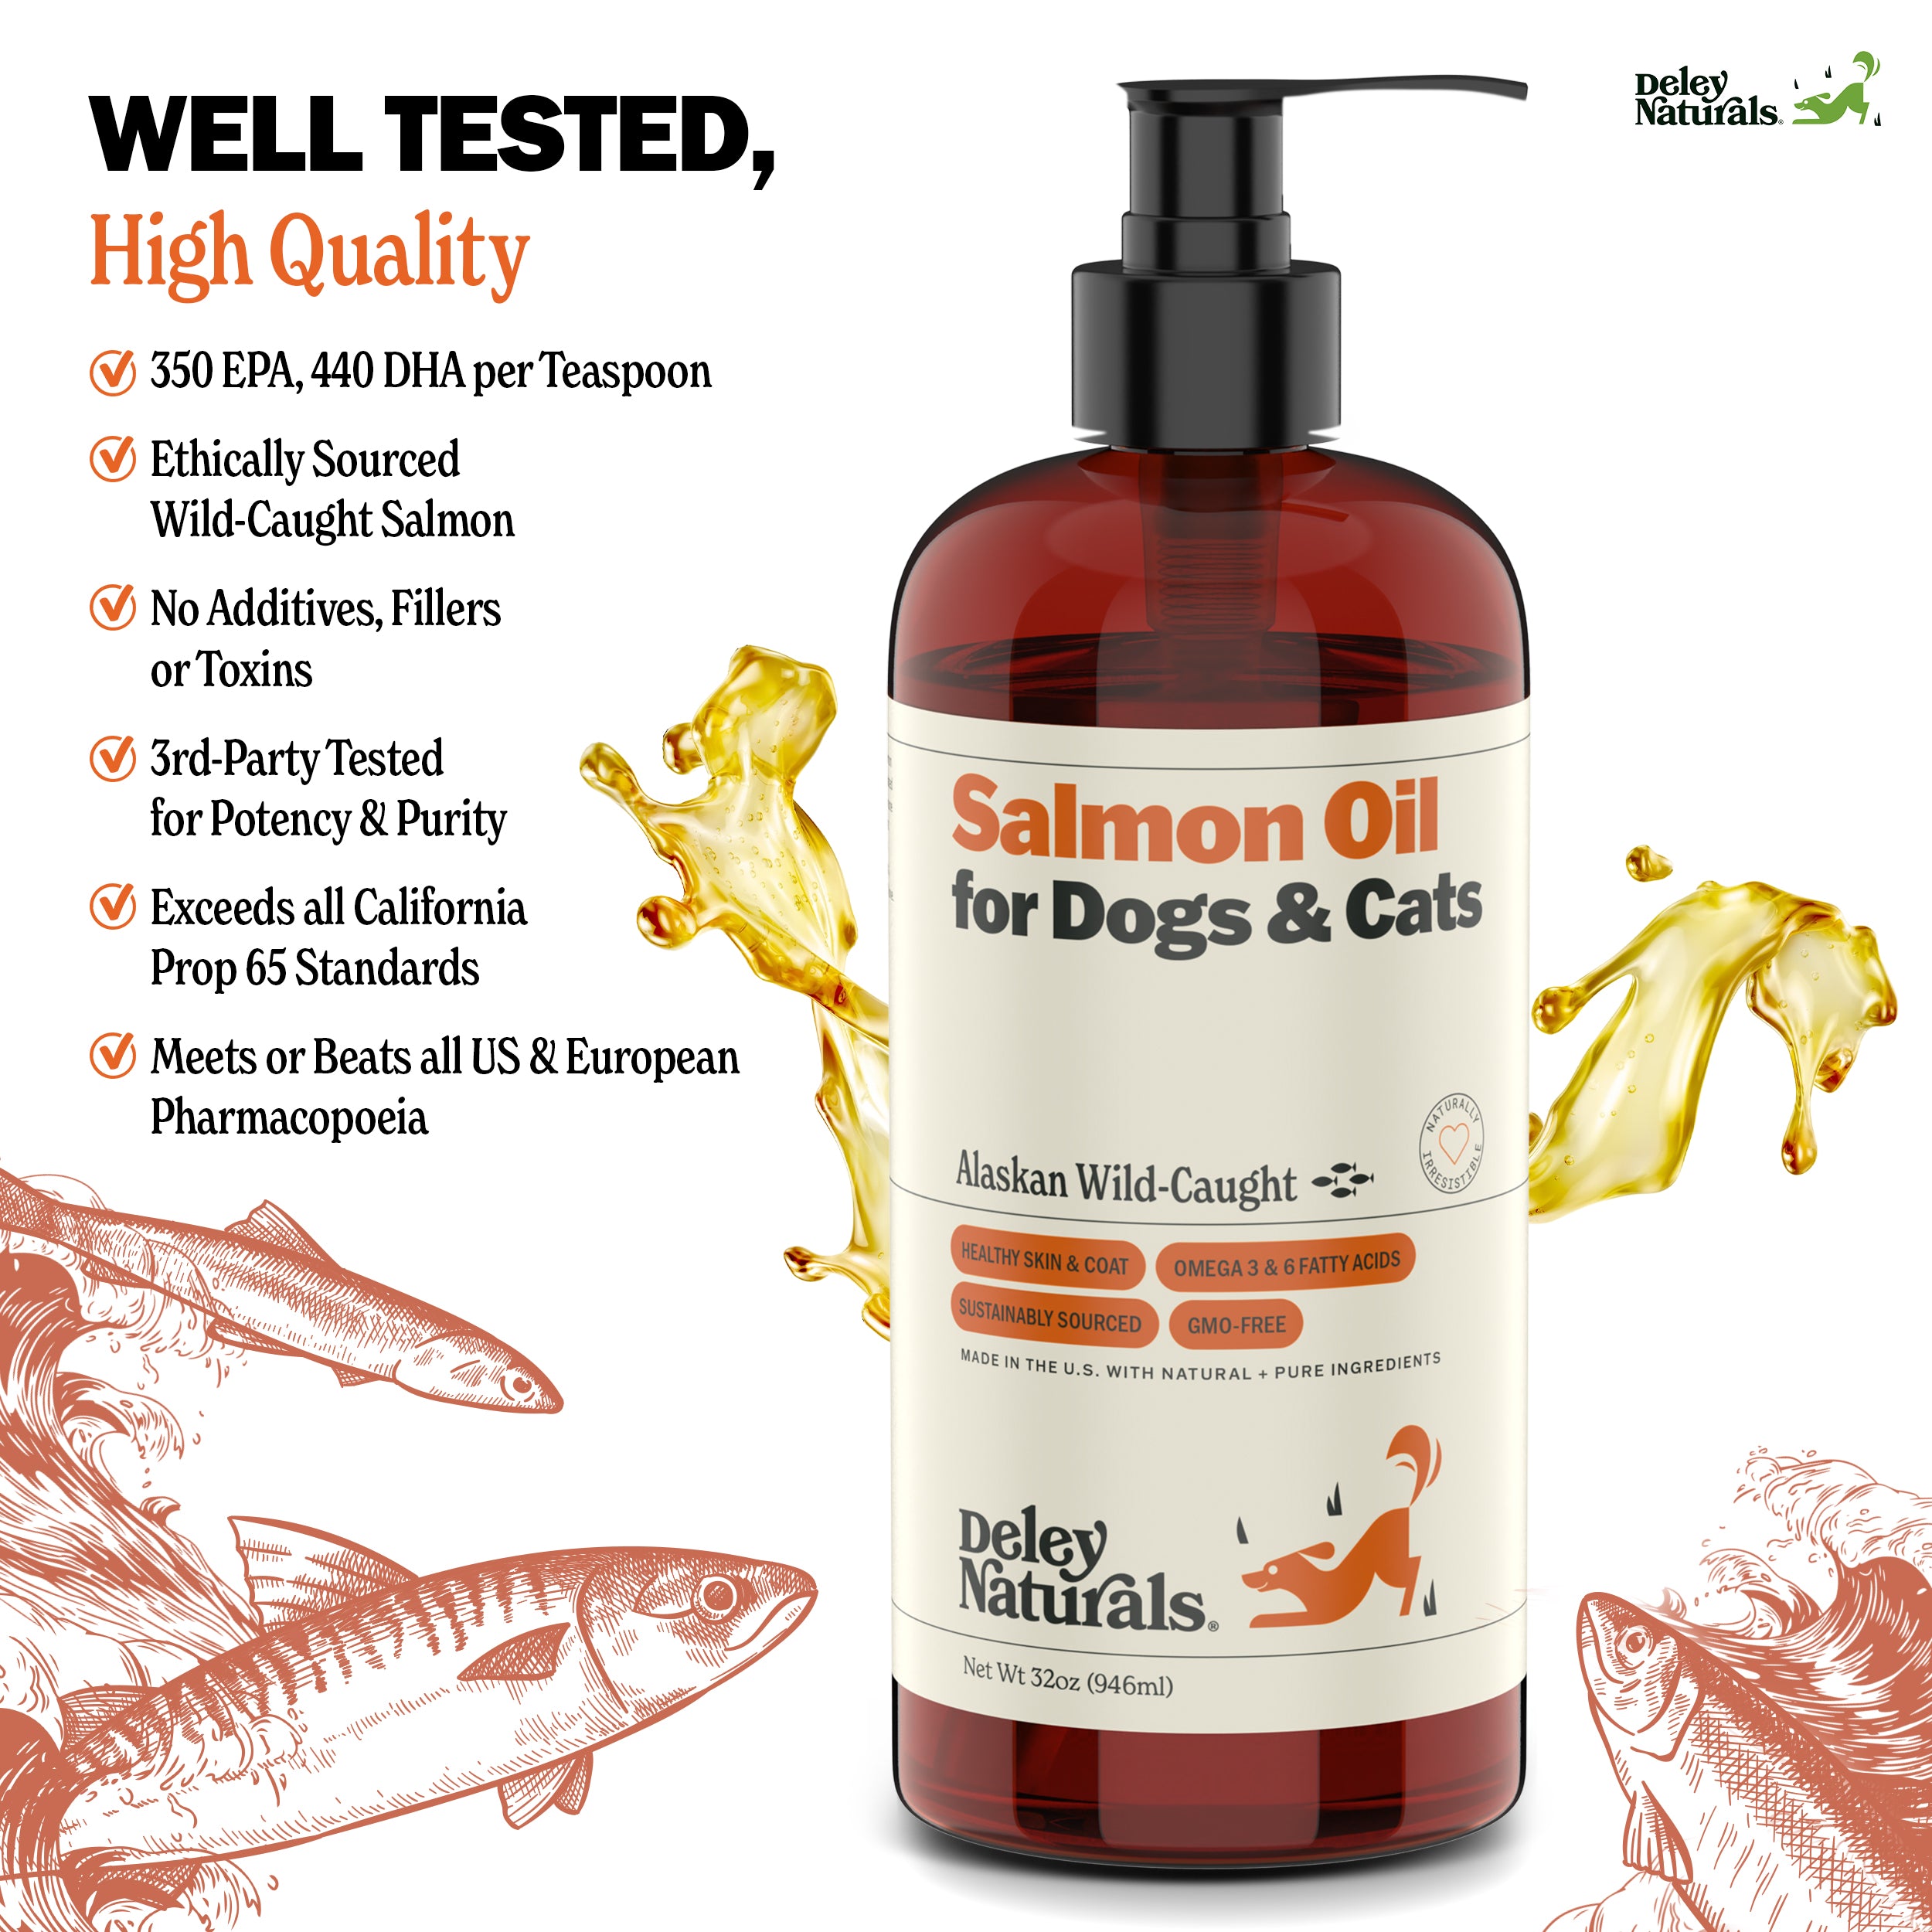 Alaskan Wild-Caught Salmon oil for Dogs & Cats 32 oz Pump